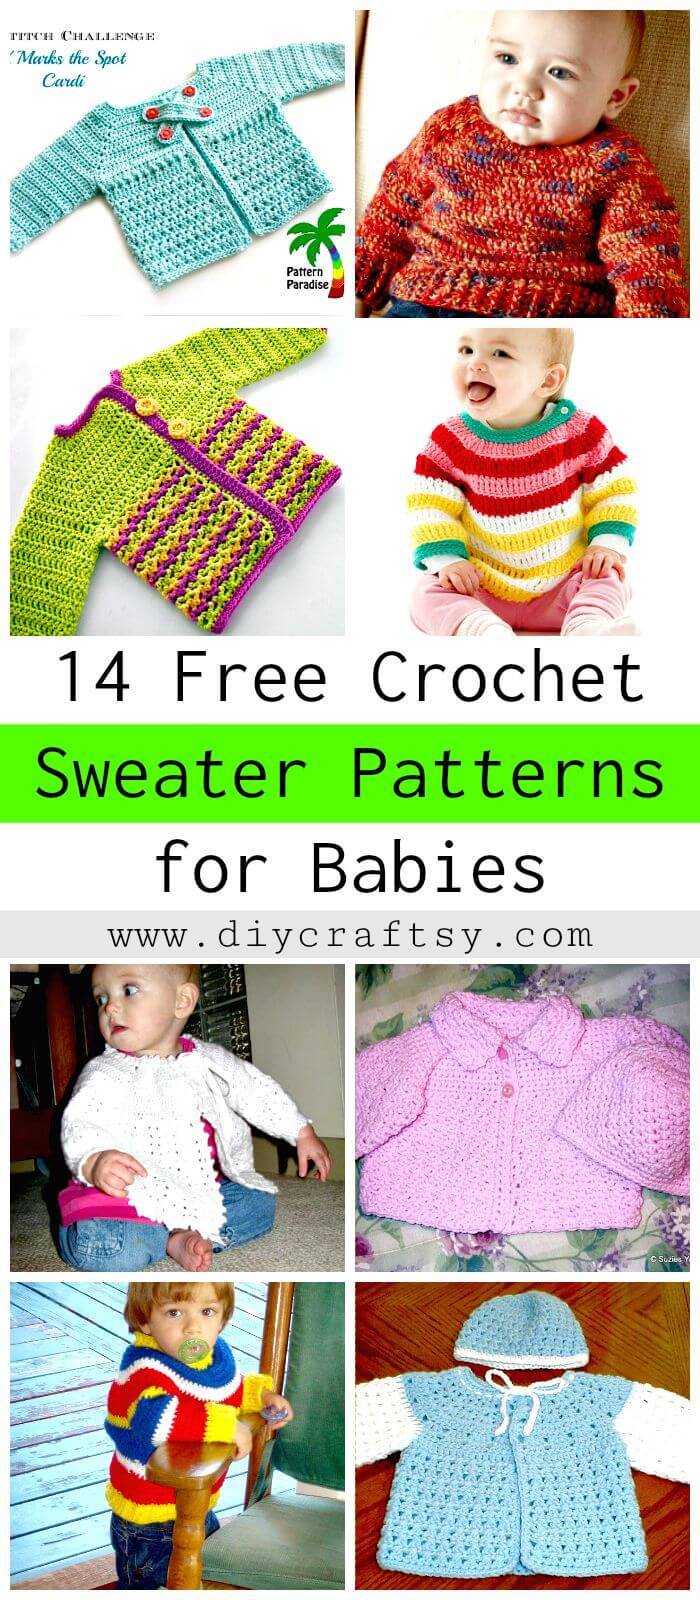 Crochet Sweater Patterns for Babies